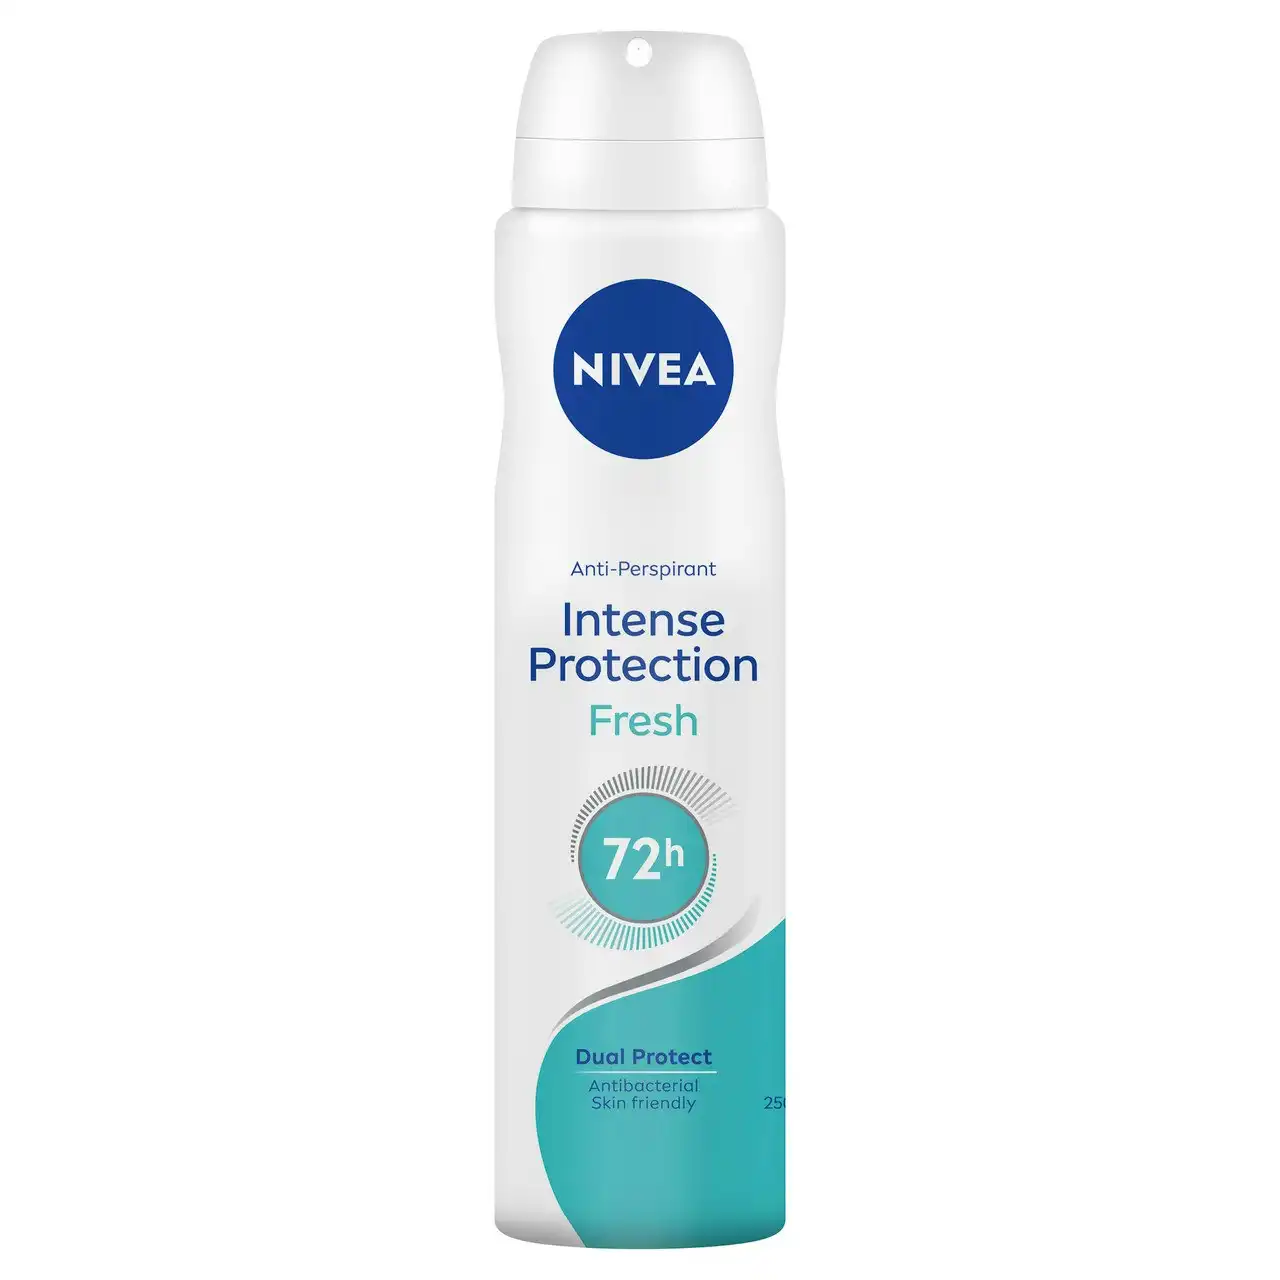 Nivea Intense Protection Fresh Anti-perspirant Aerosol Deodorant